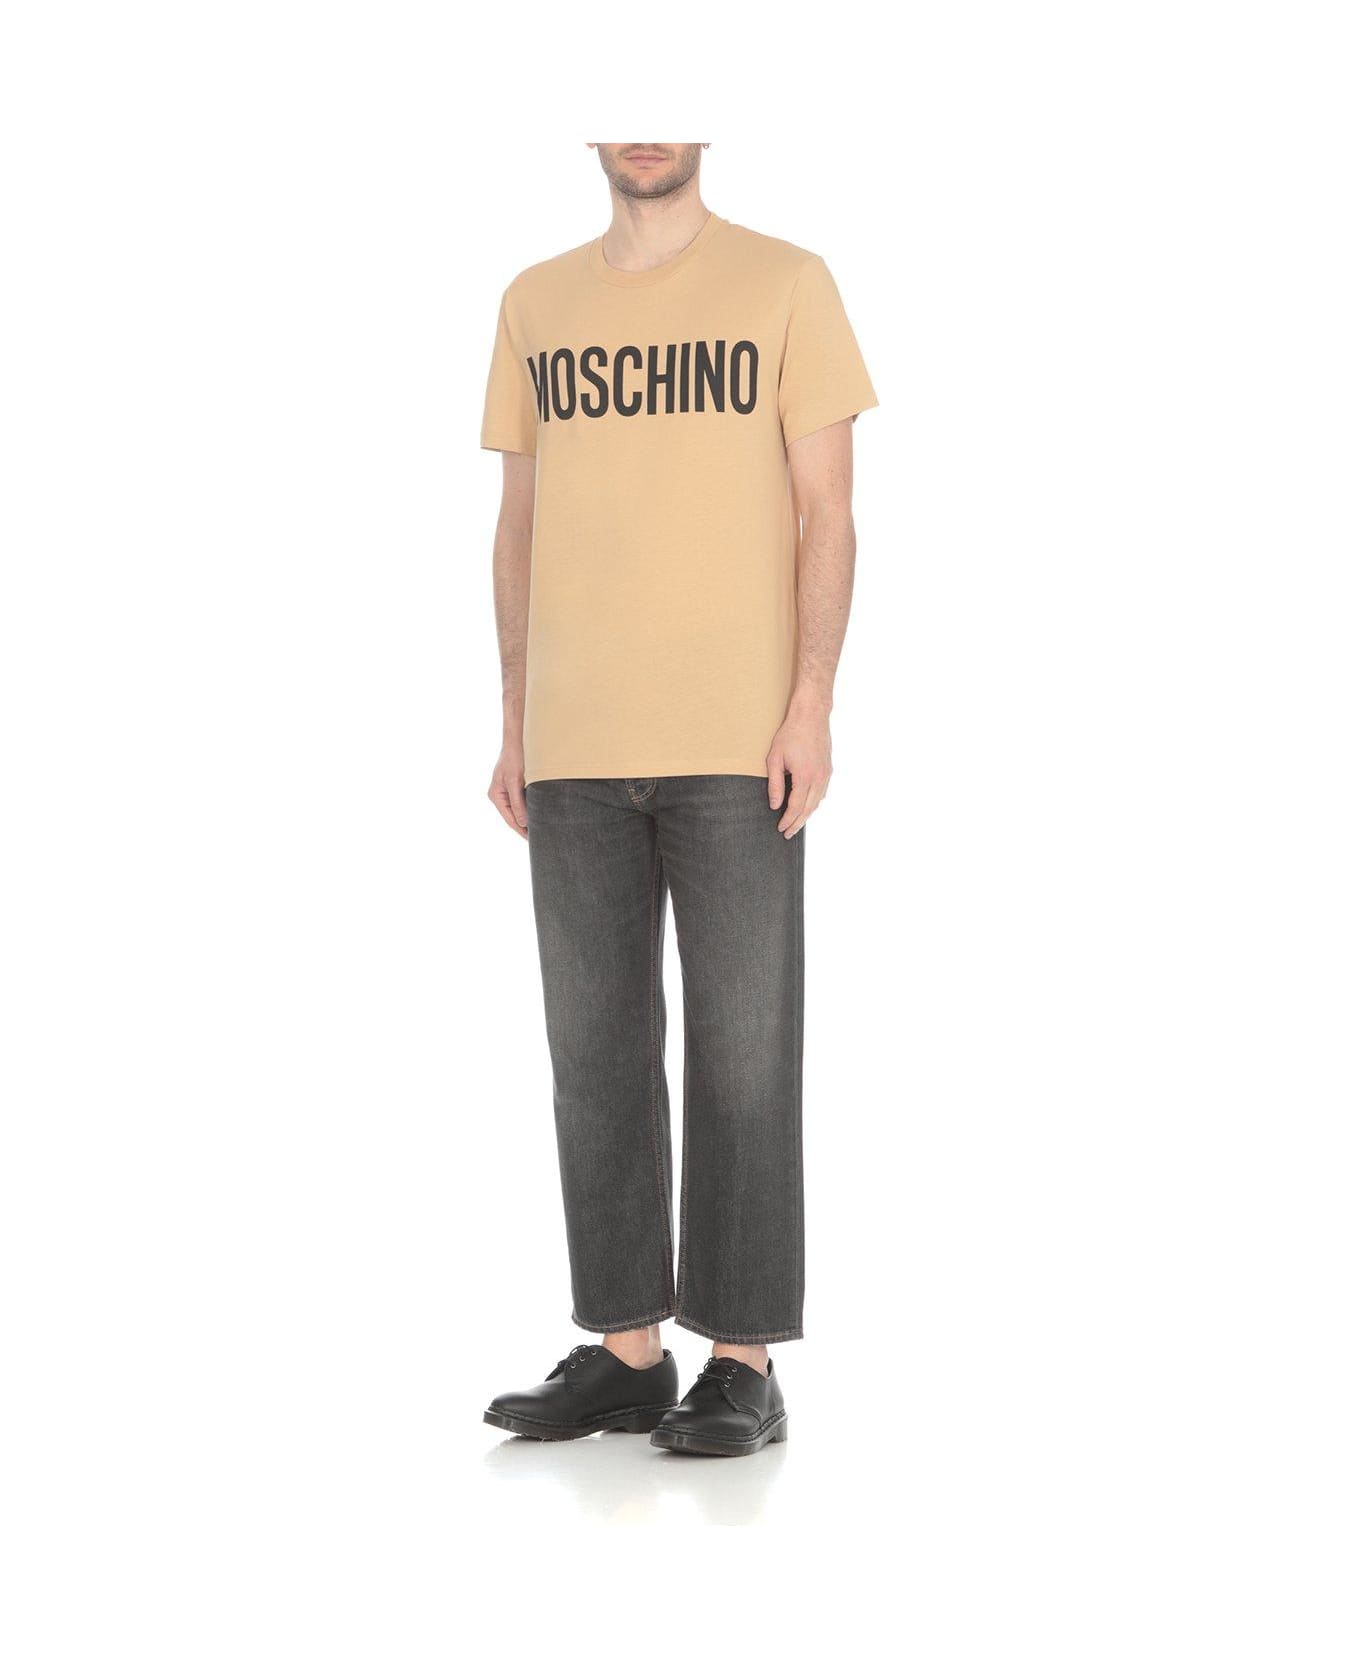 Moschino Logo Printed Crewneck T-shirt - Beige